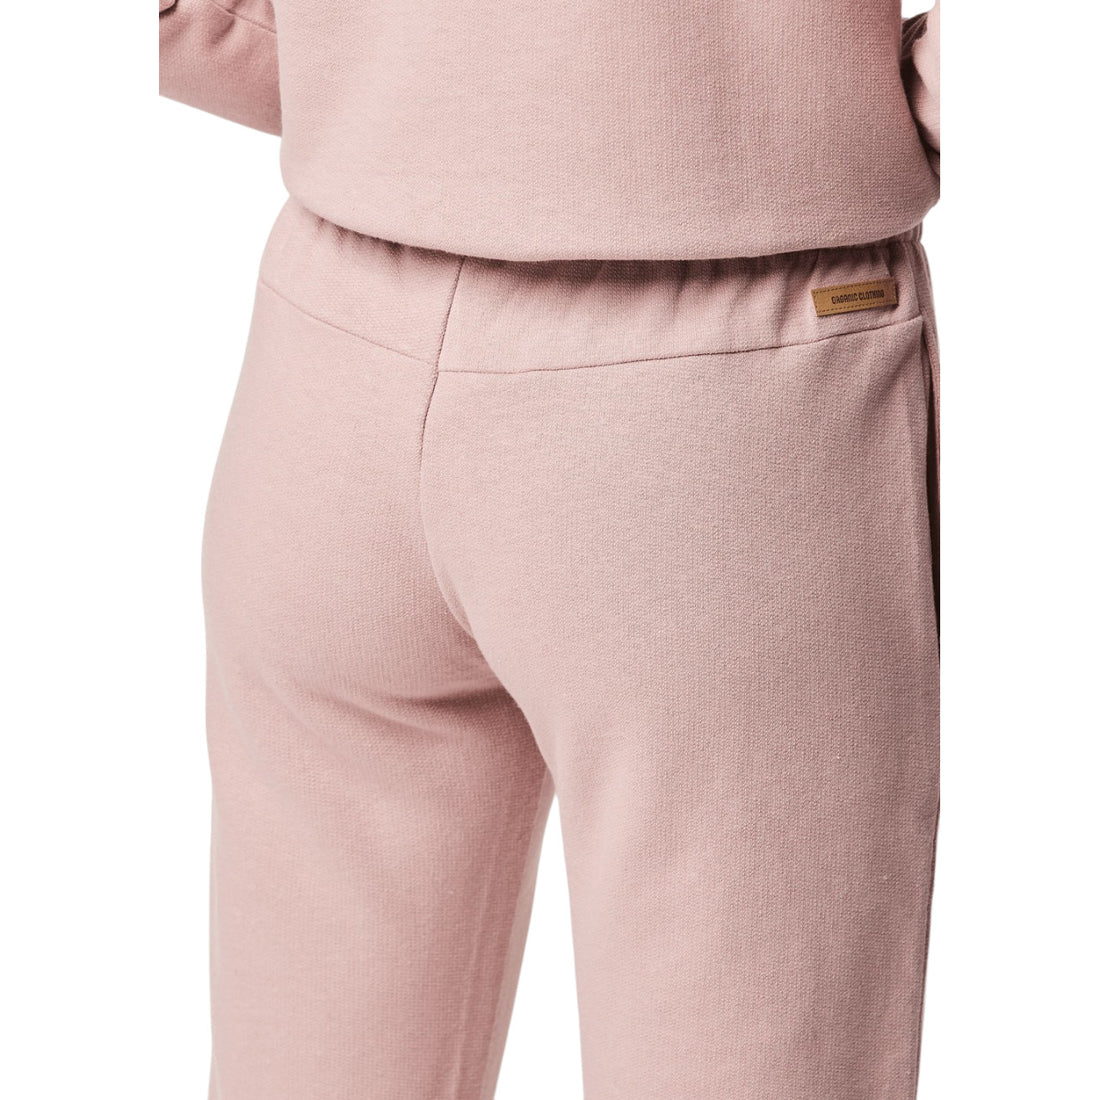 Picture Organic Clothing Hampy Pants - Woodrose